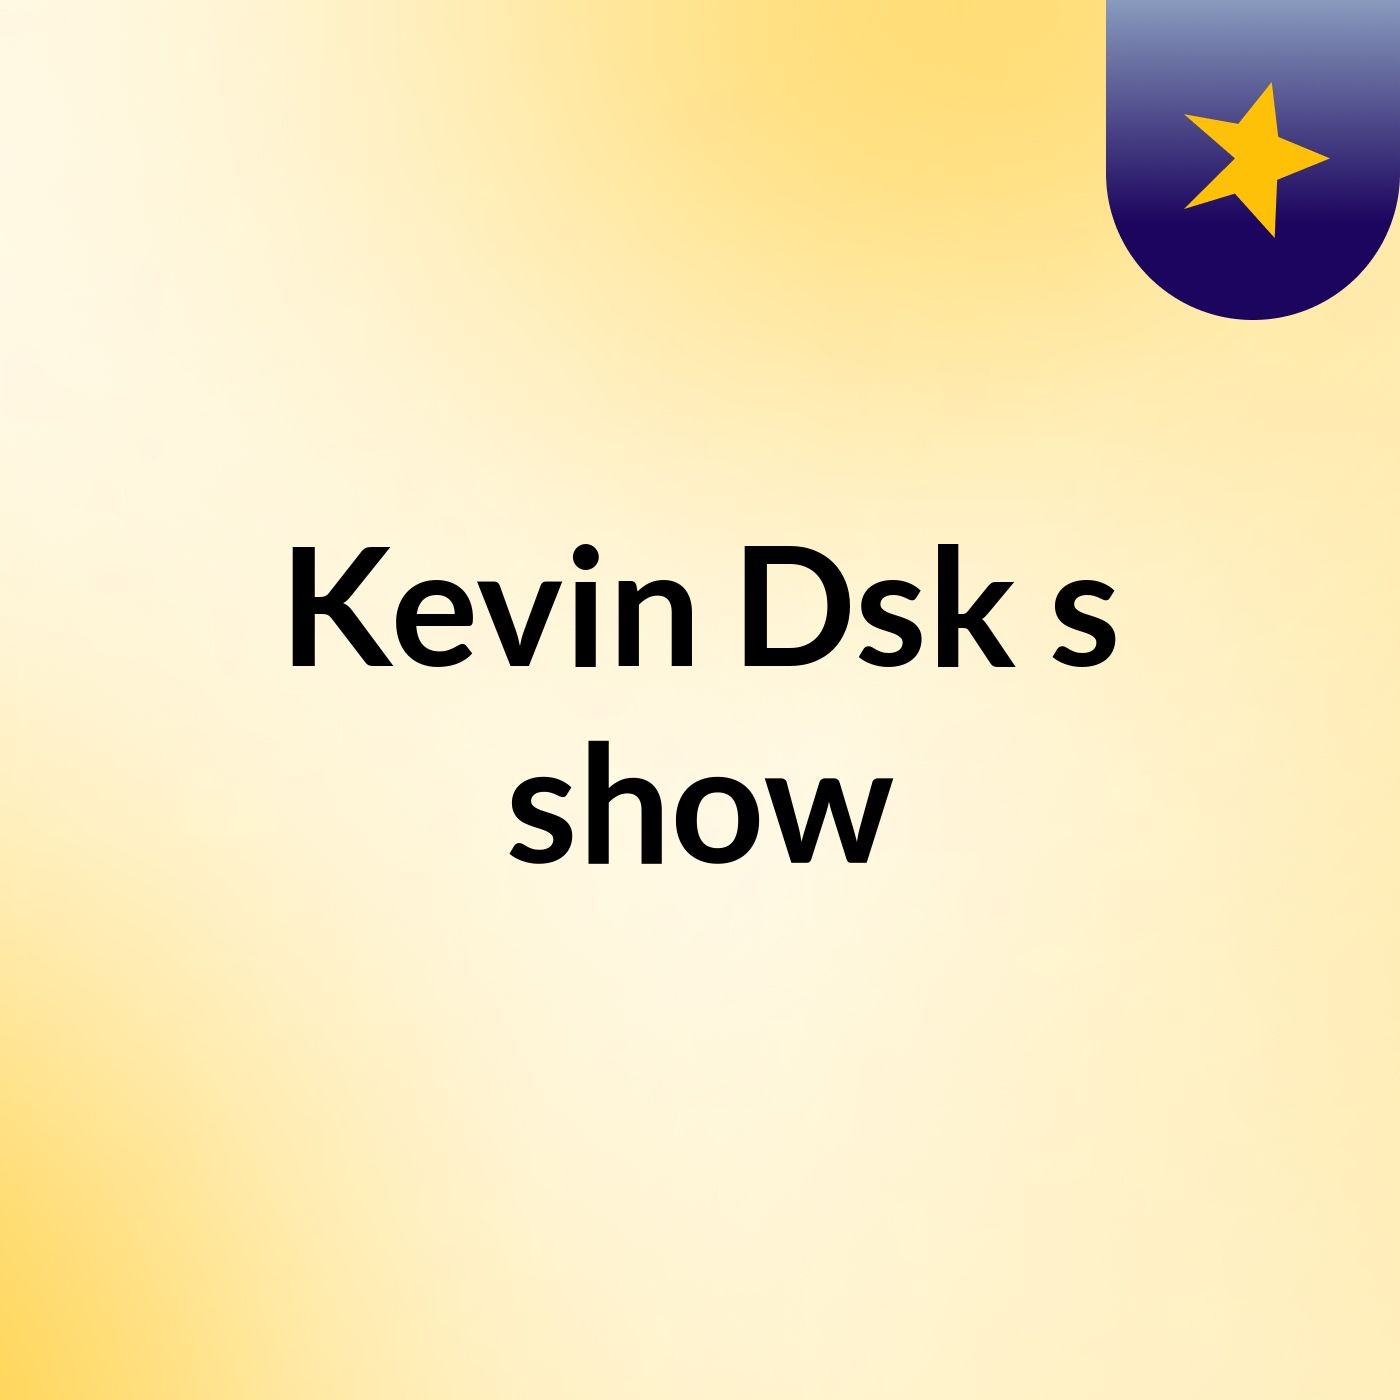 Kevin Dsk's show